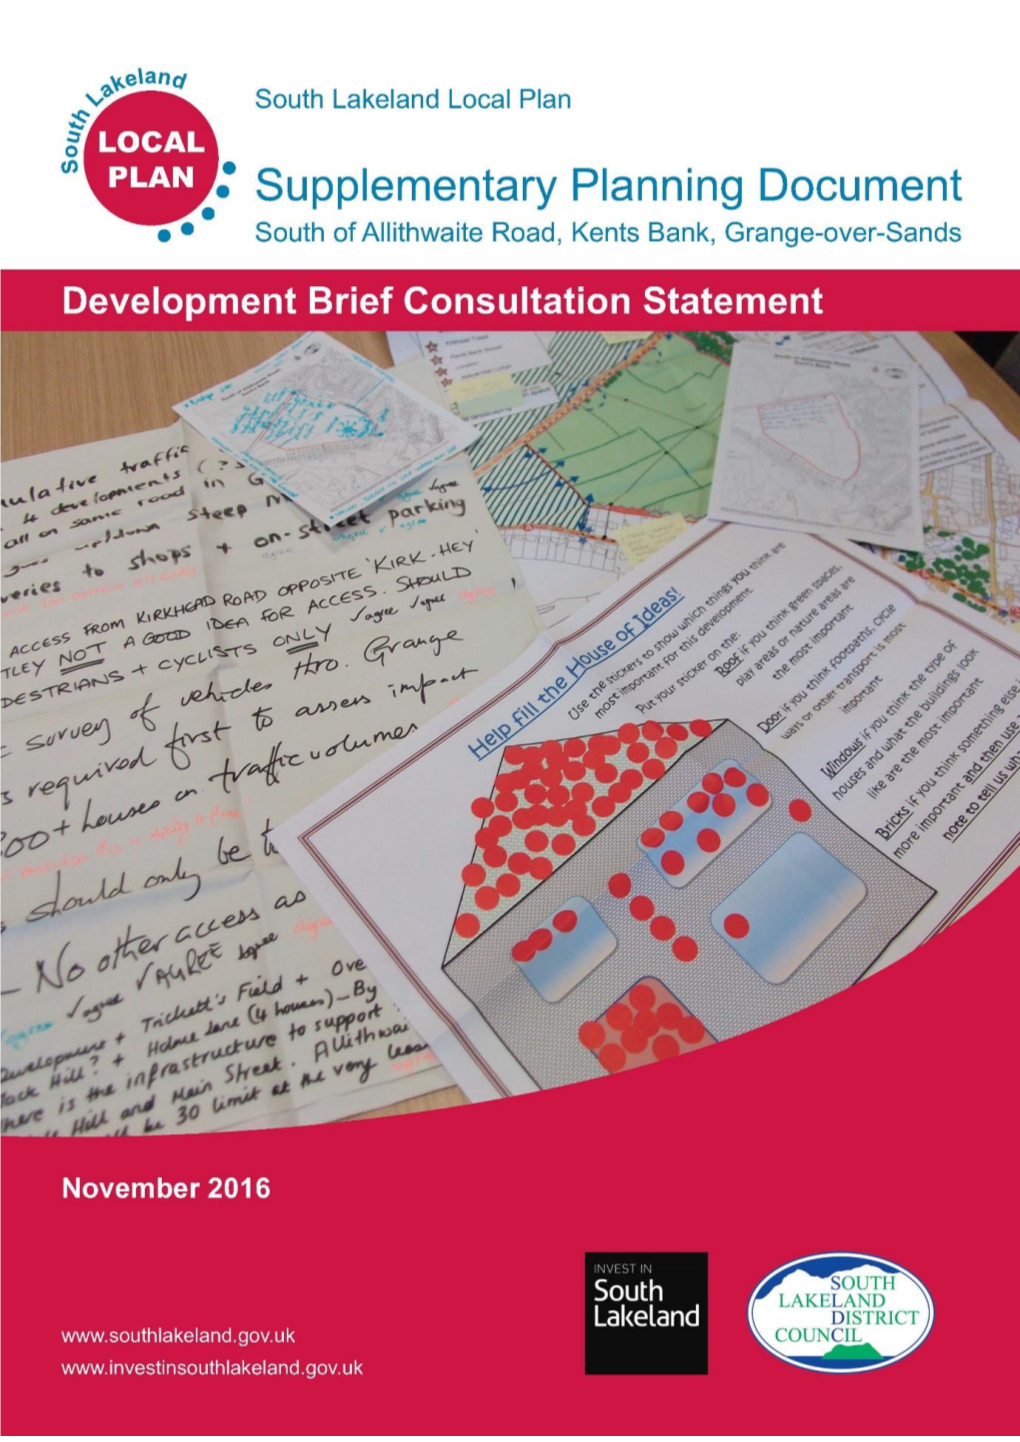 Land South of Allithwaite Road, Kents Bank Consultation Statement, November 2016